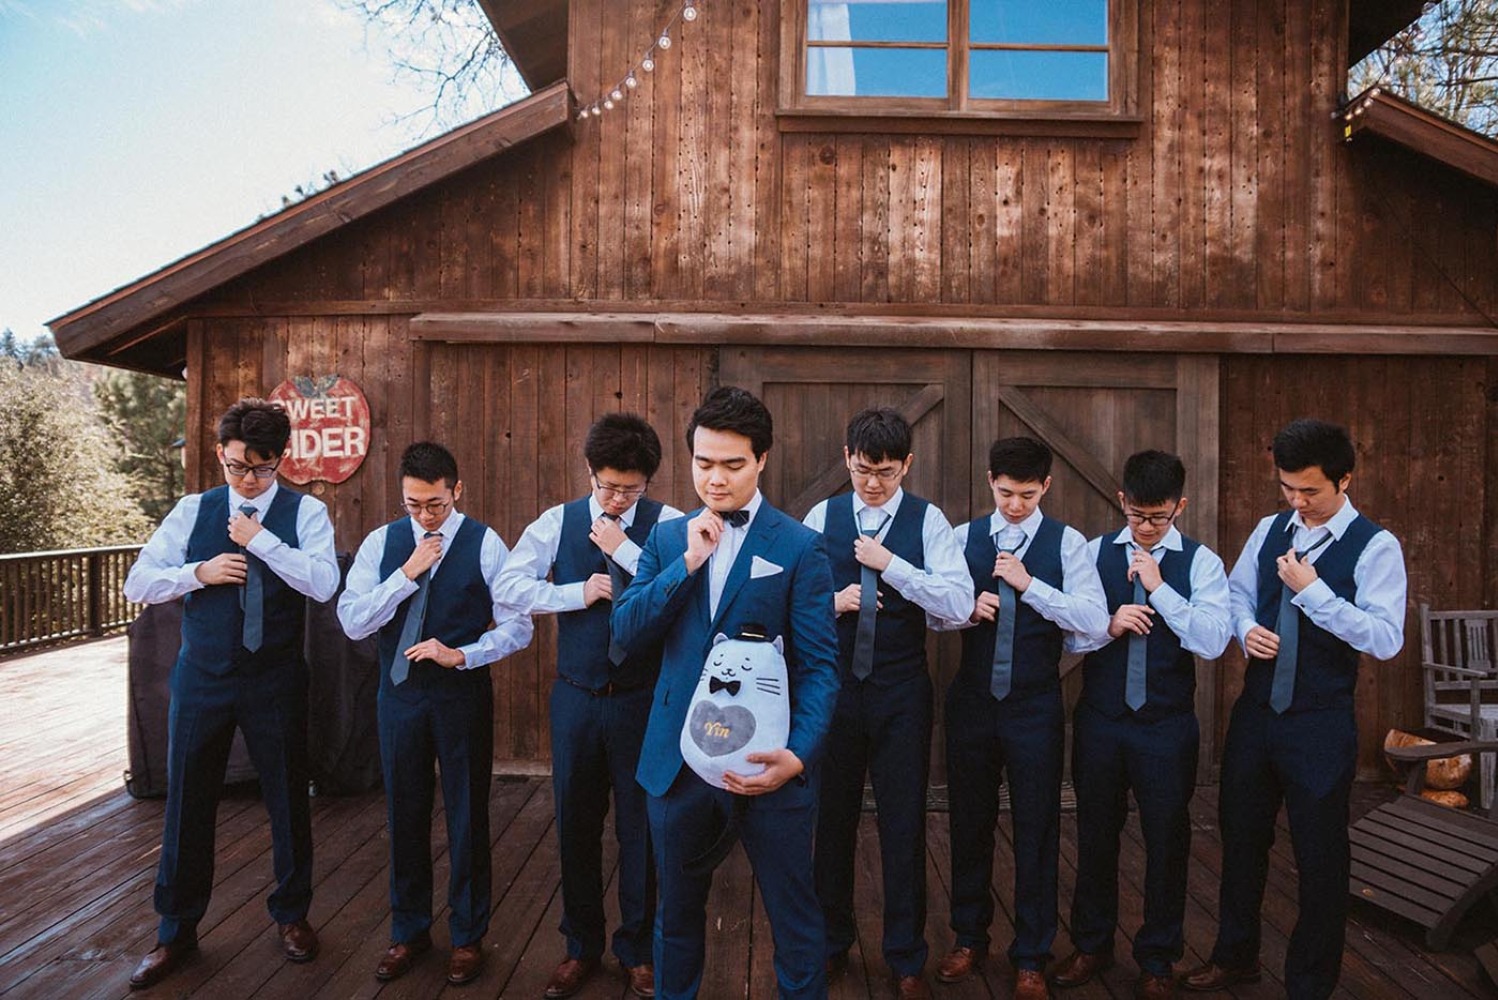 groom and his men in navy blue